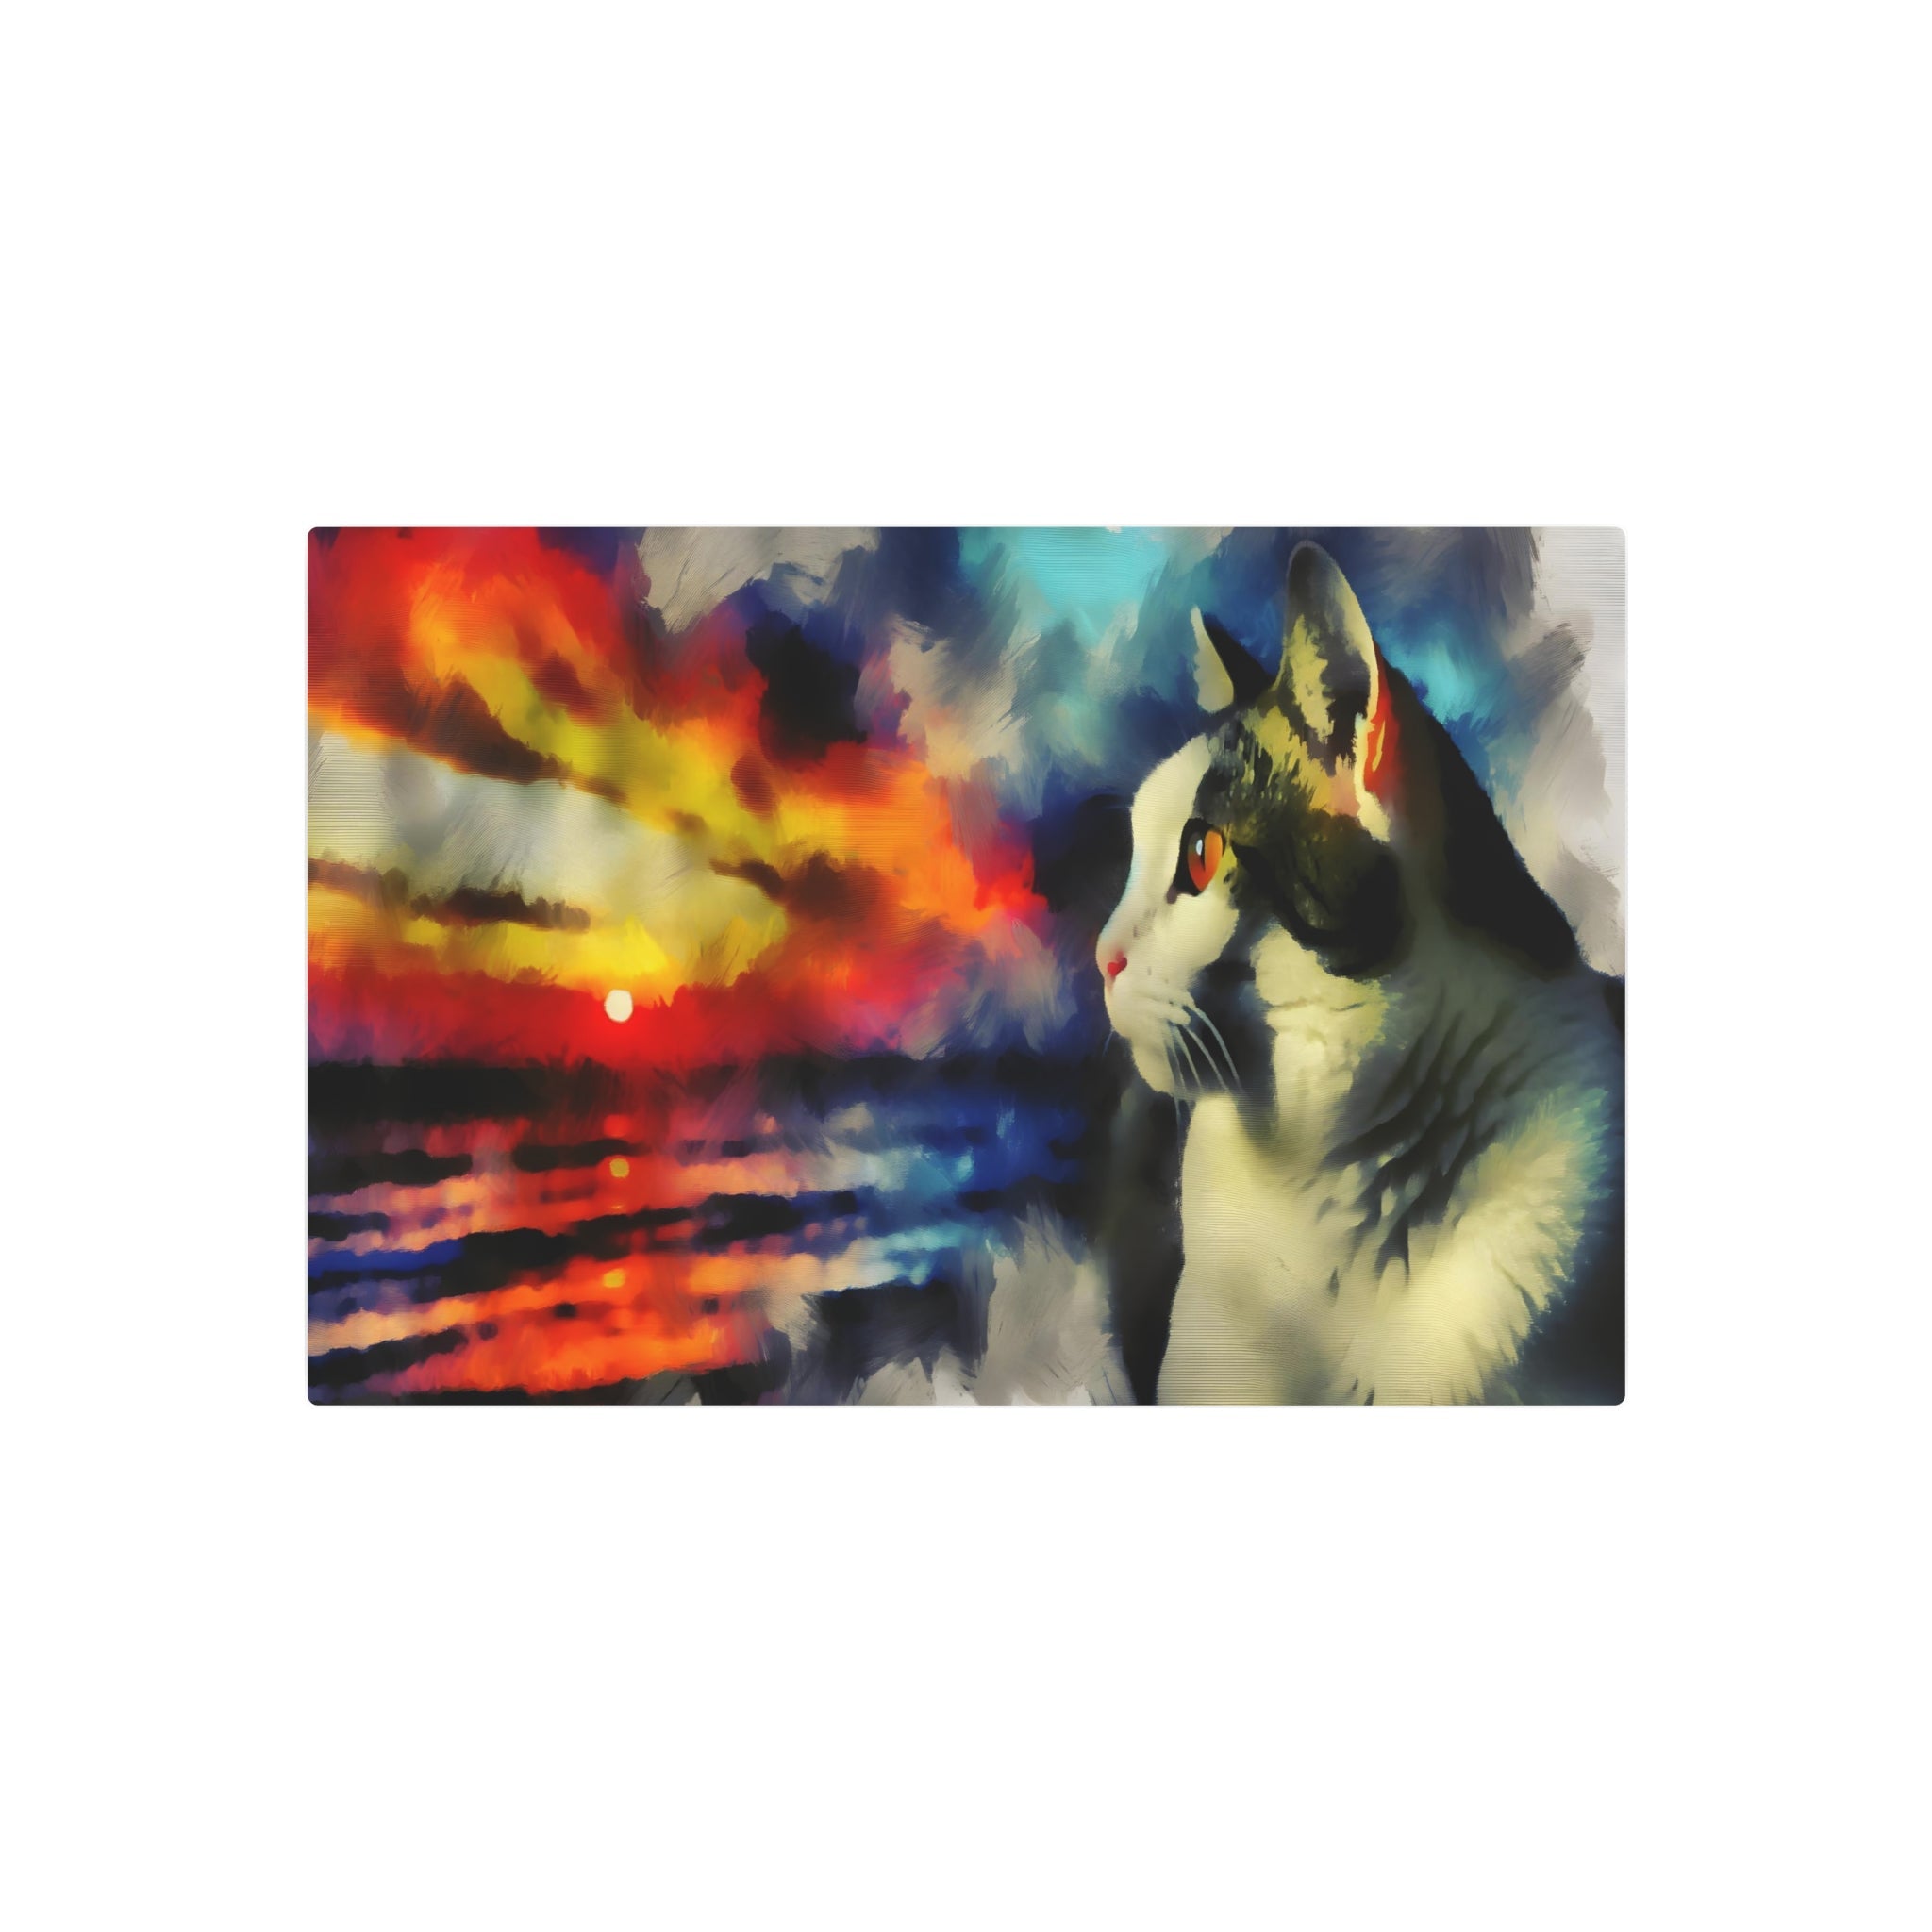 Metal Poster Art | "Romanticism Western Art Style - Contemplative Cat Gazing at Vibrant Sunset | Unique Handcrafted Romantic Artwork" - Metal Poster Art 30″ x 20″ (Horizontal) 0.12''